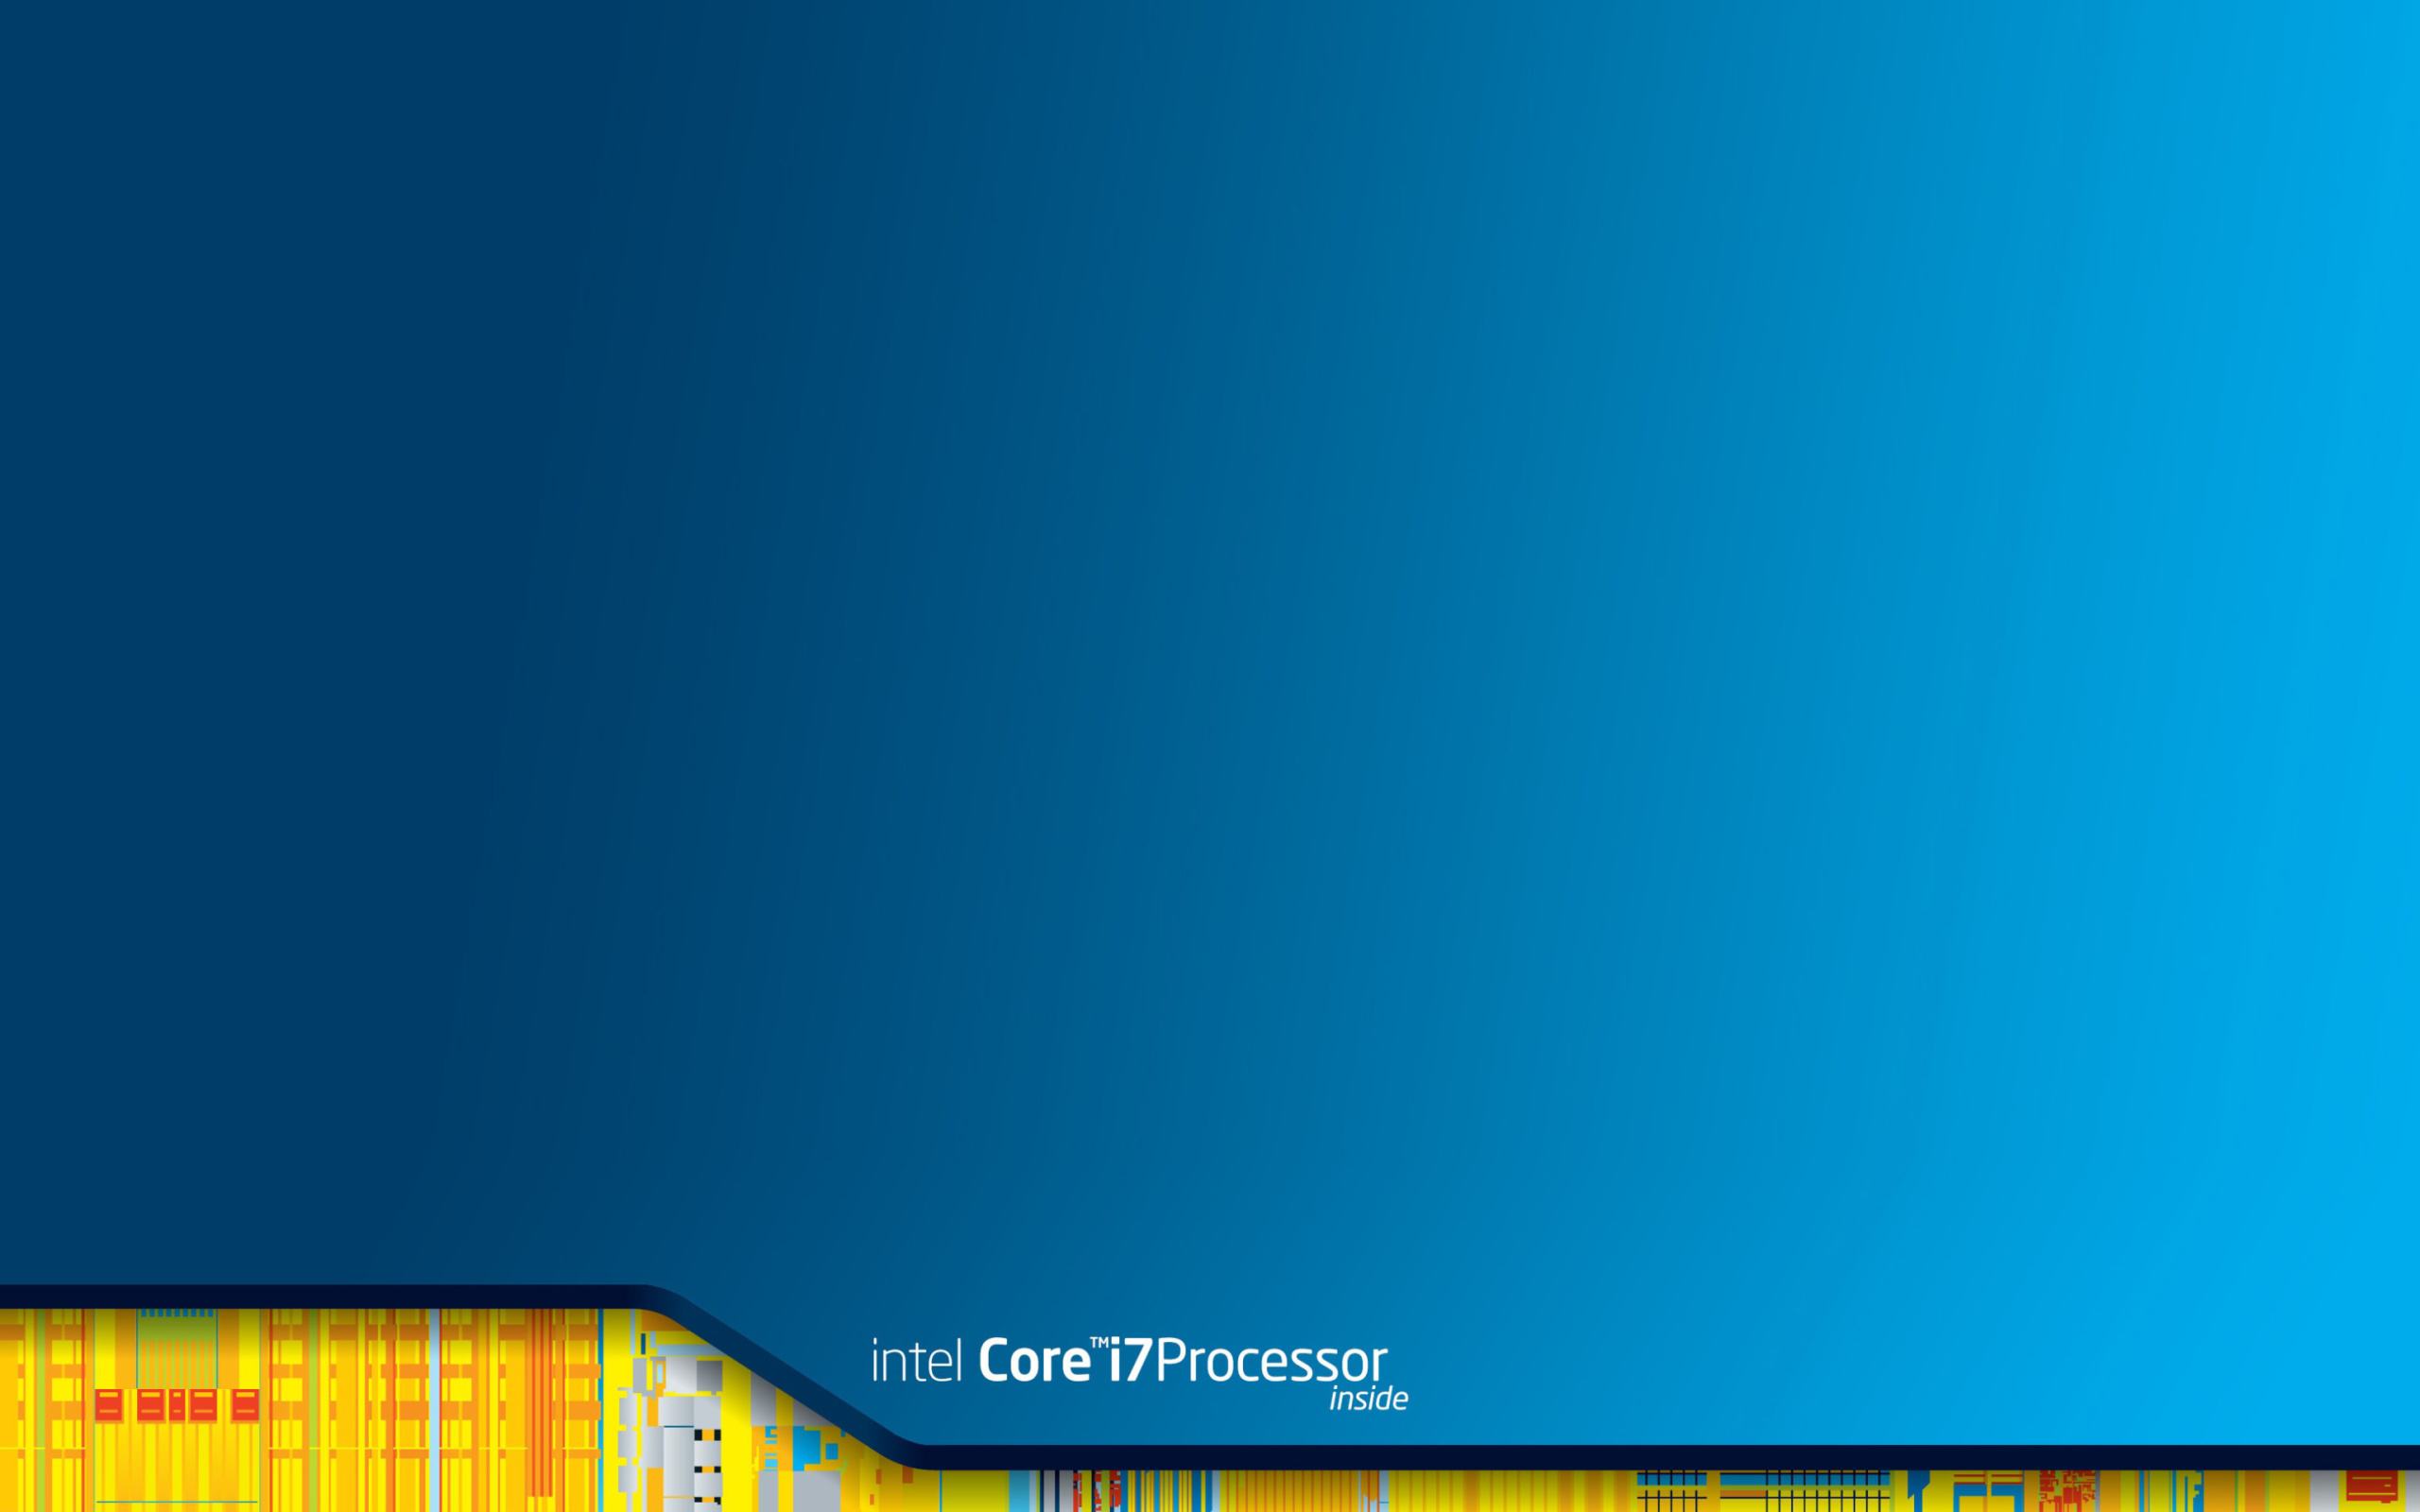 Das Intel Core i7 Processor Wallpaper 2560x1600